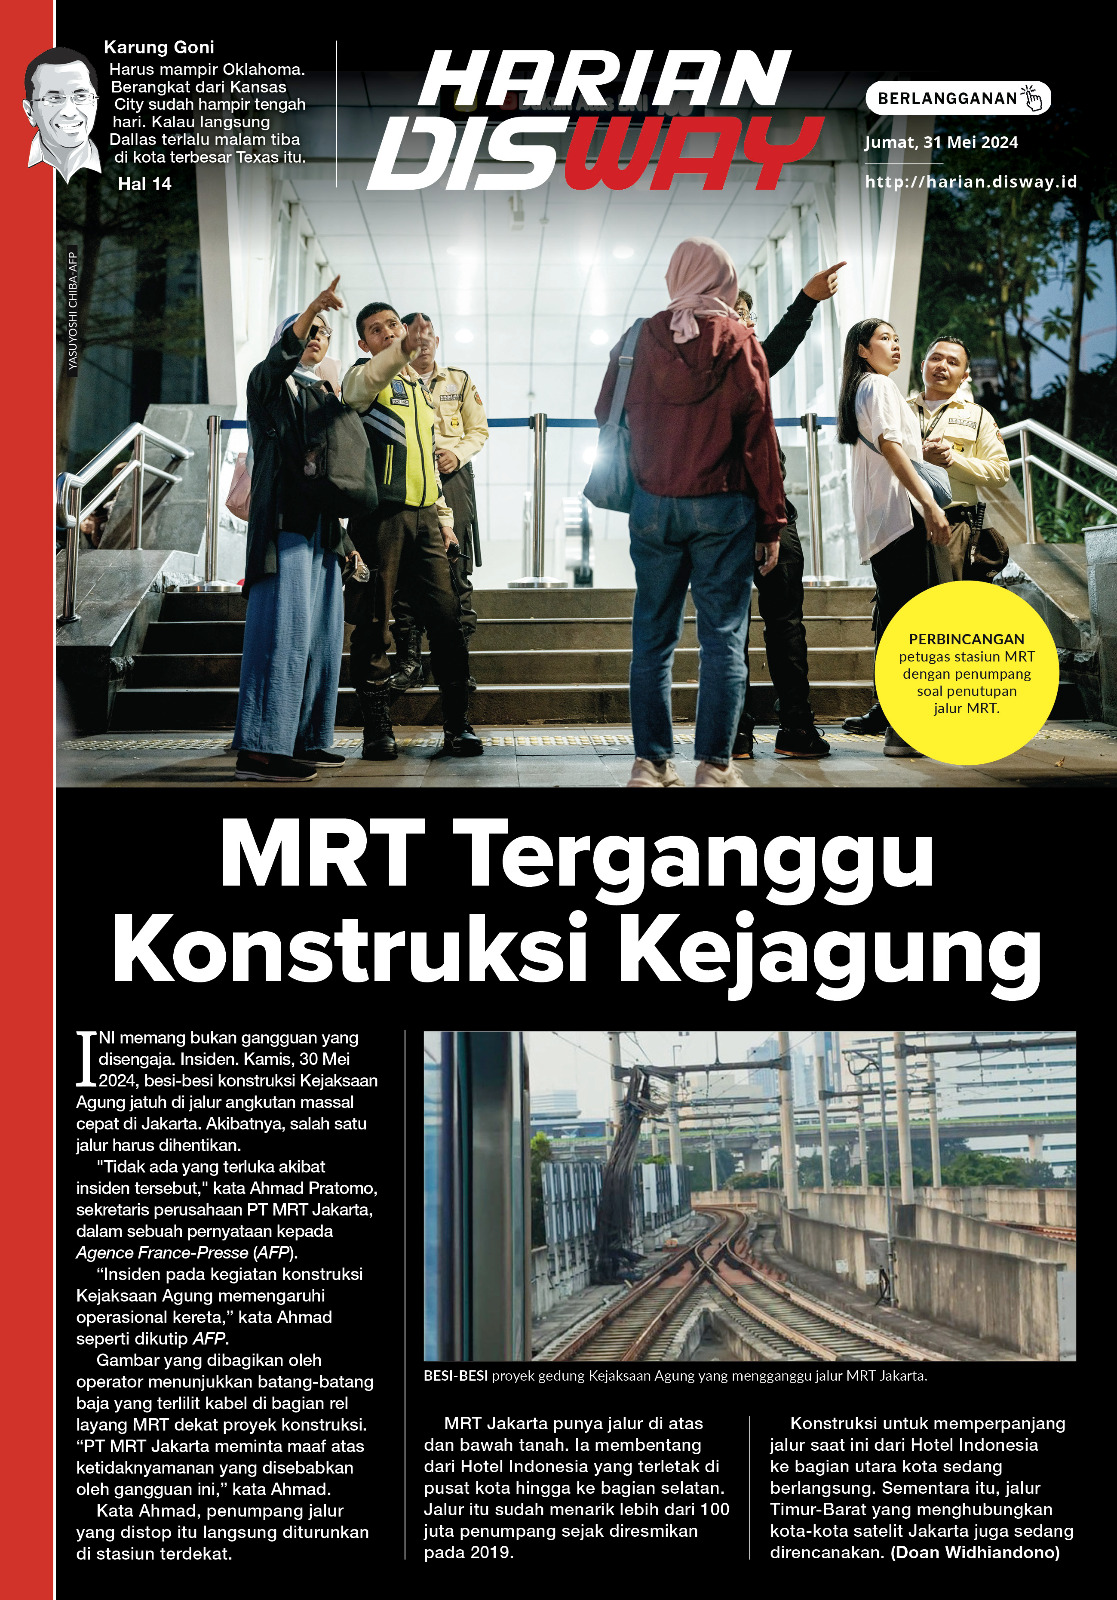 MRT Terganggu Konstruksi Kejagung